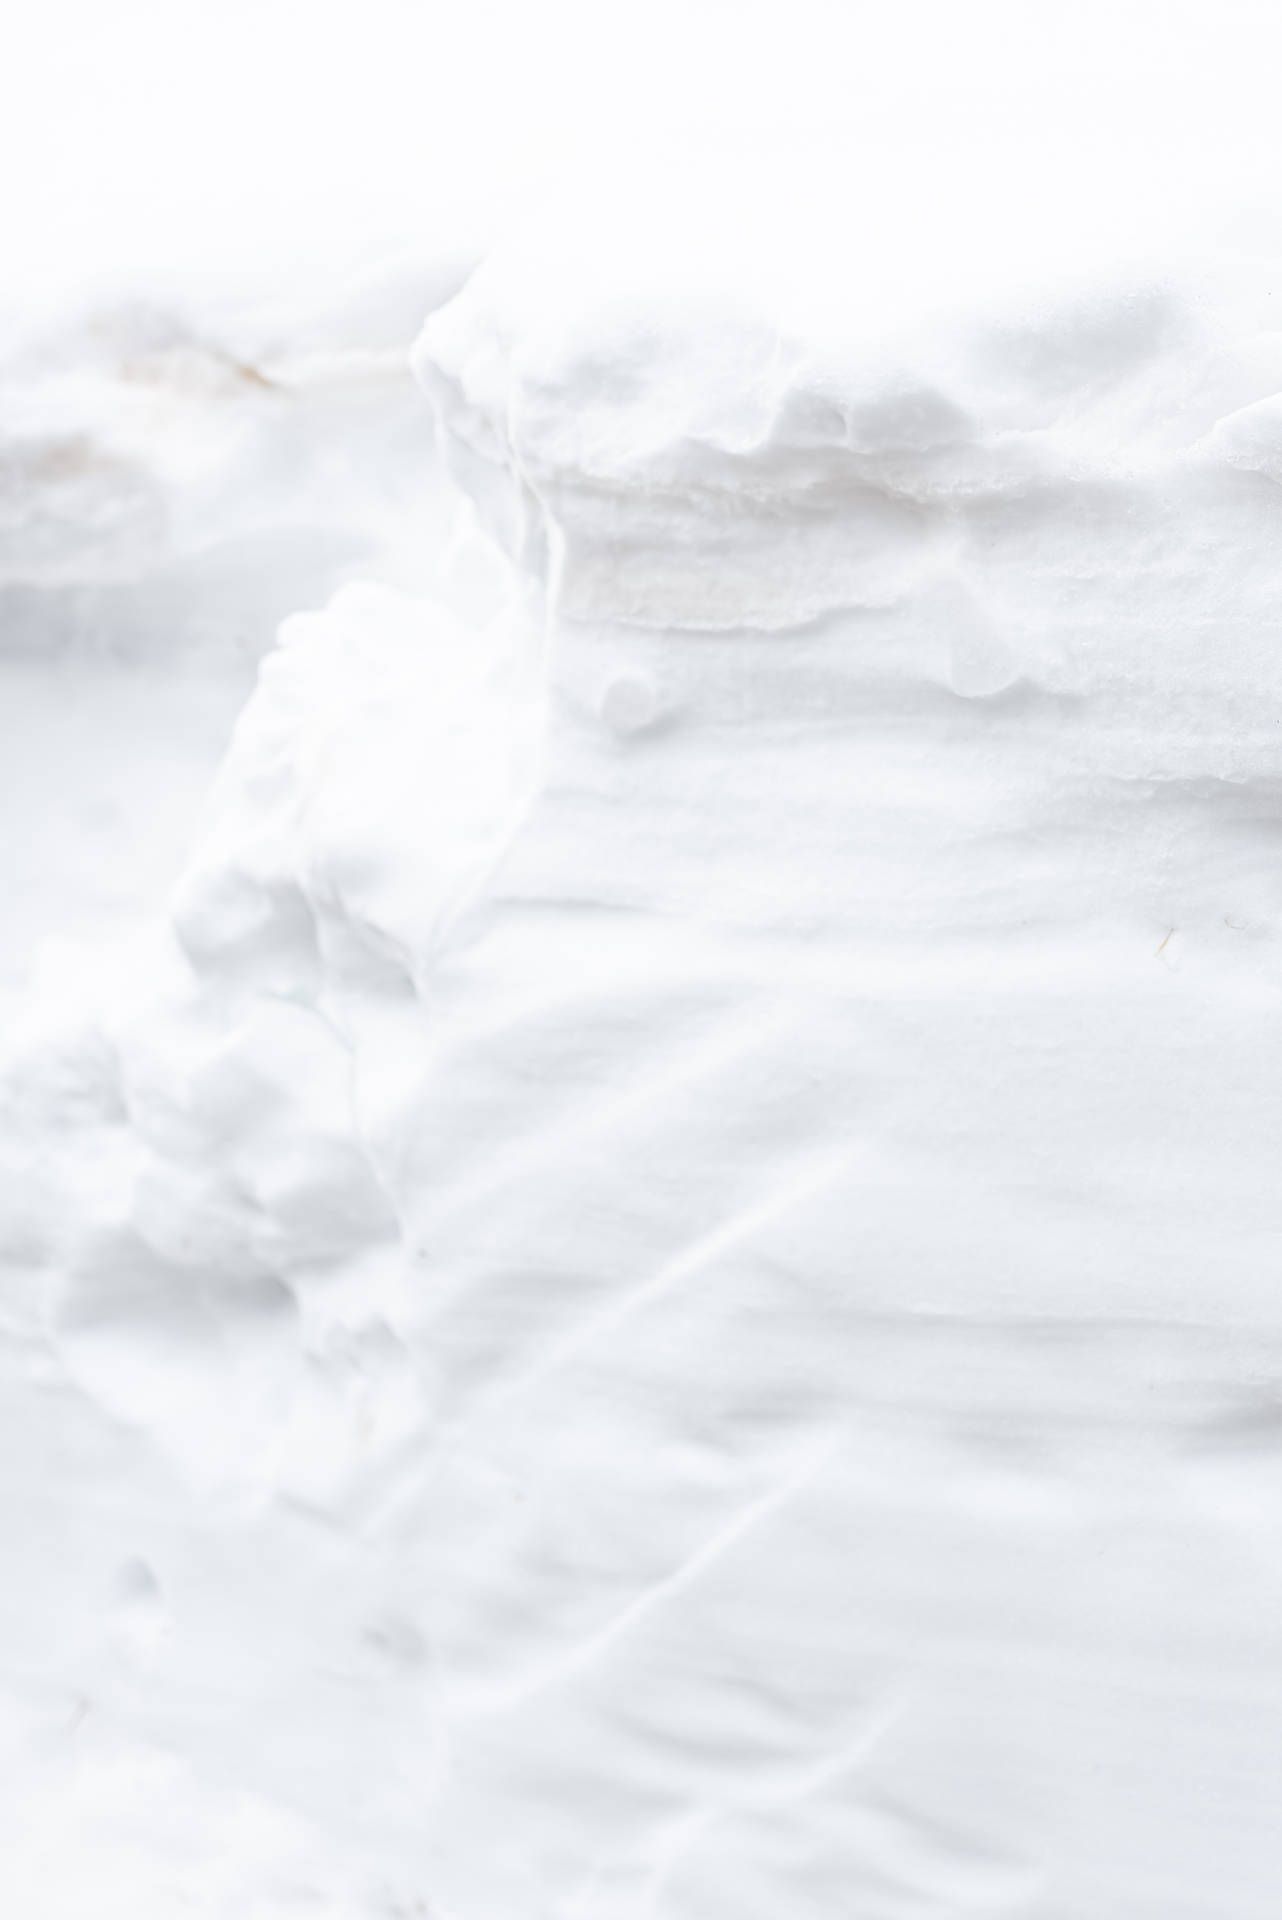 White Hintergrundbild 1282x1920. Download White Aesthetic Snow Wallpaper